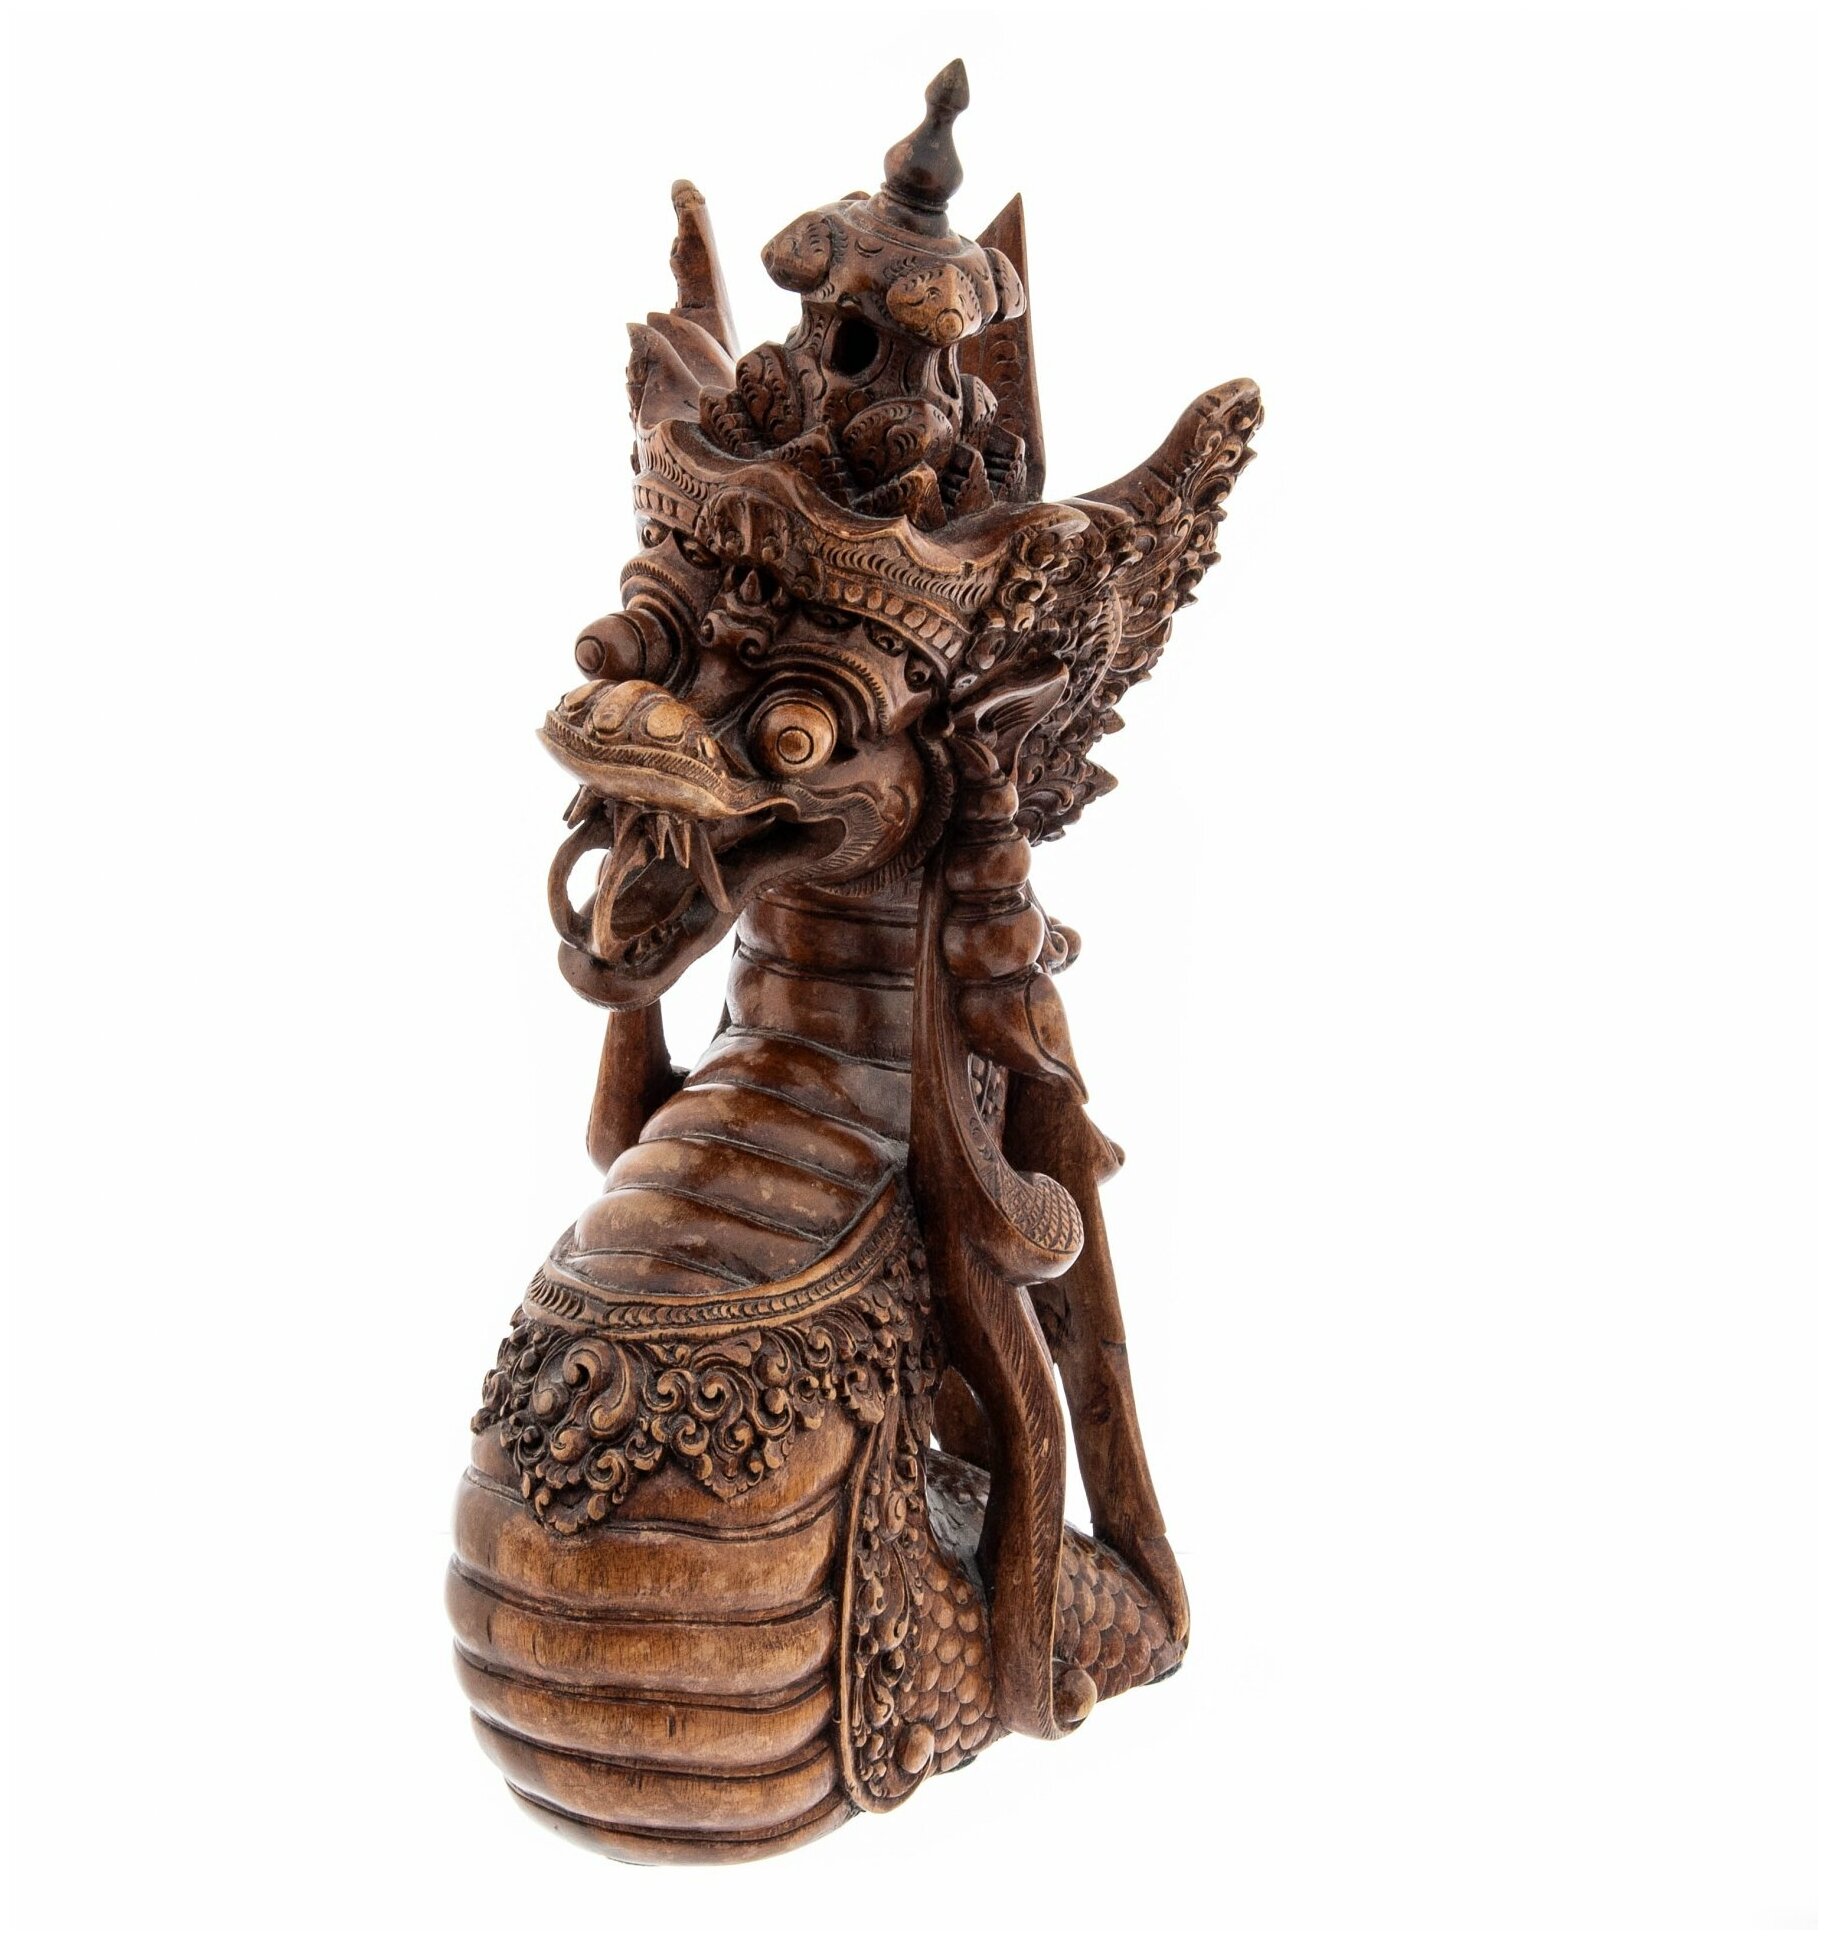 Статуэтка "Дракон", сандаловое дерево, резьба, Индонезия, 1950-1975 гг.